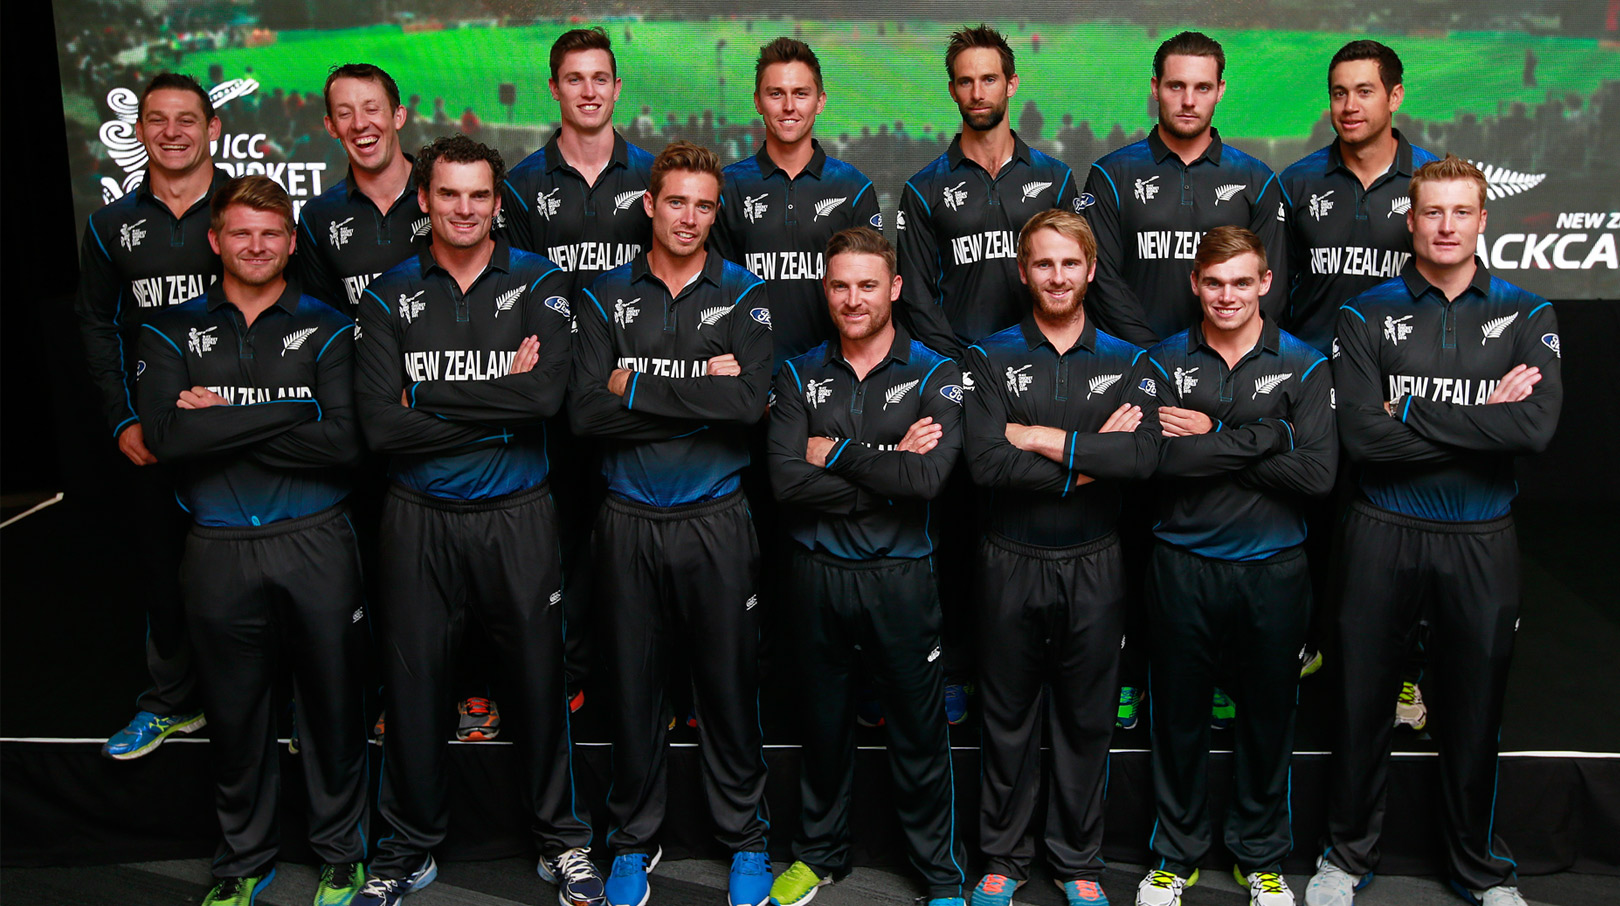 BLACKCAPS ICC World Cup 2015 squad announced | NZC